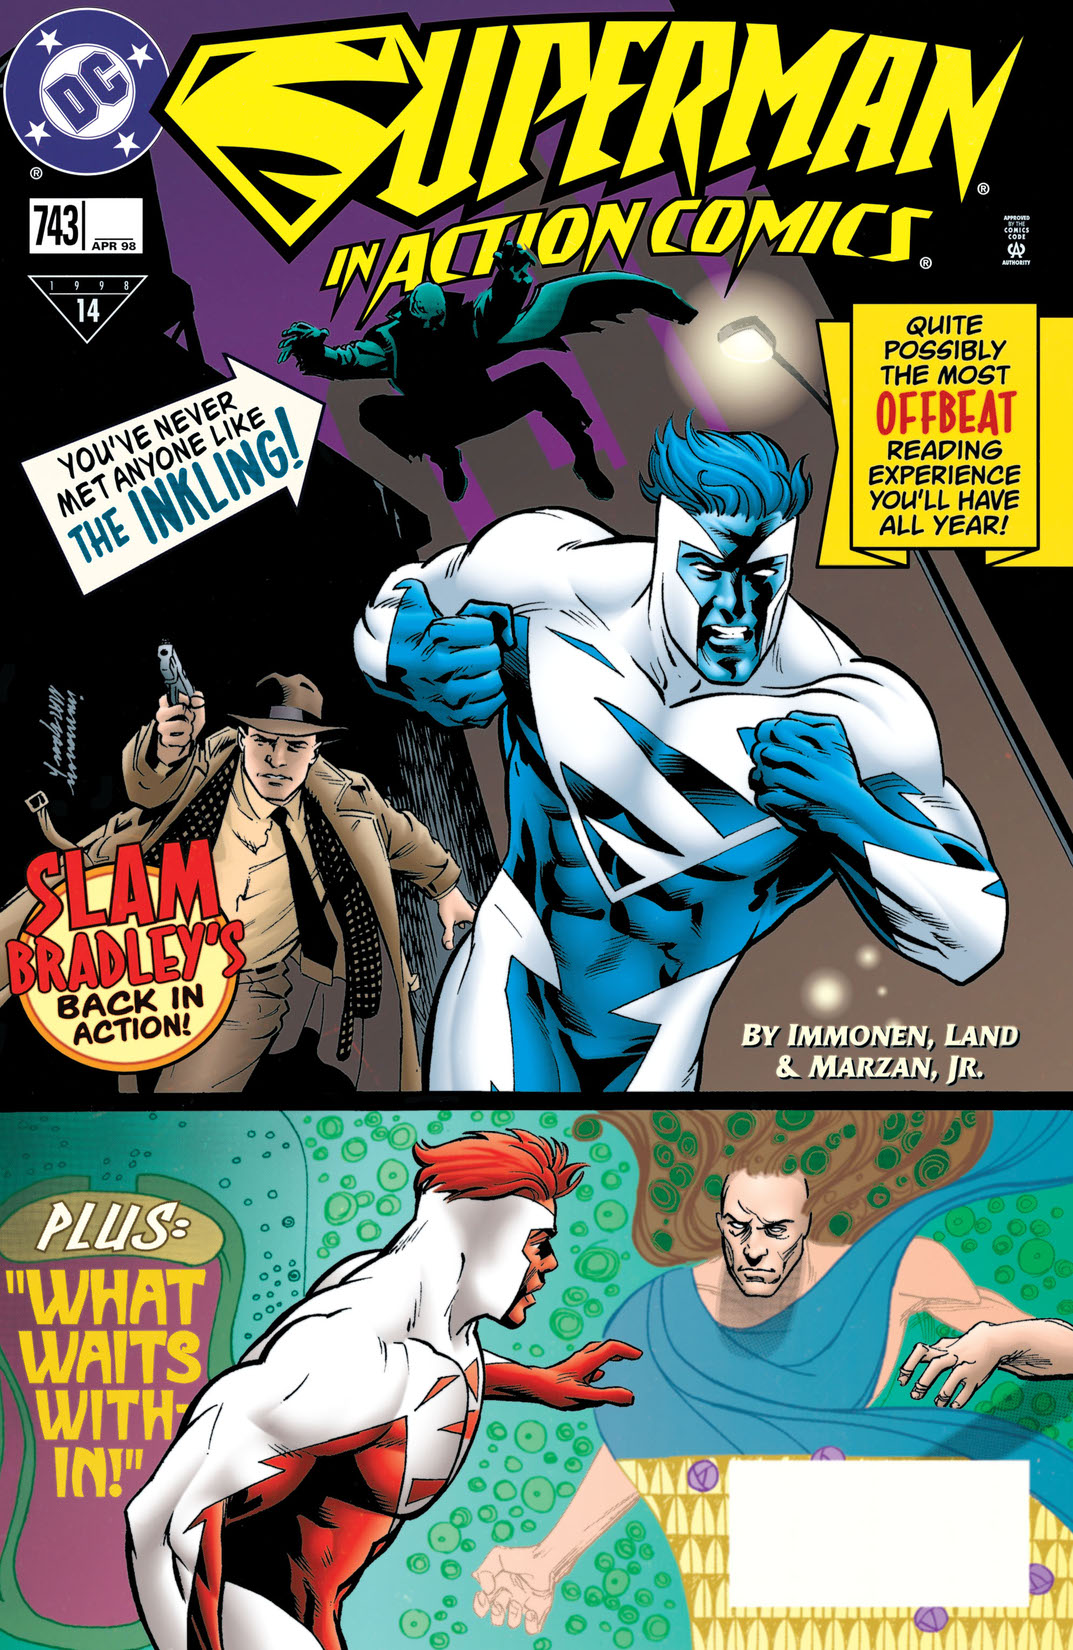 Action Comics (1938-) #743 preview images